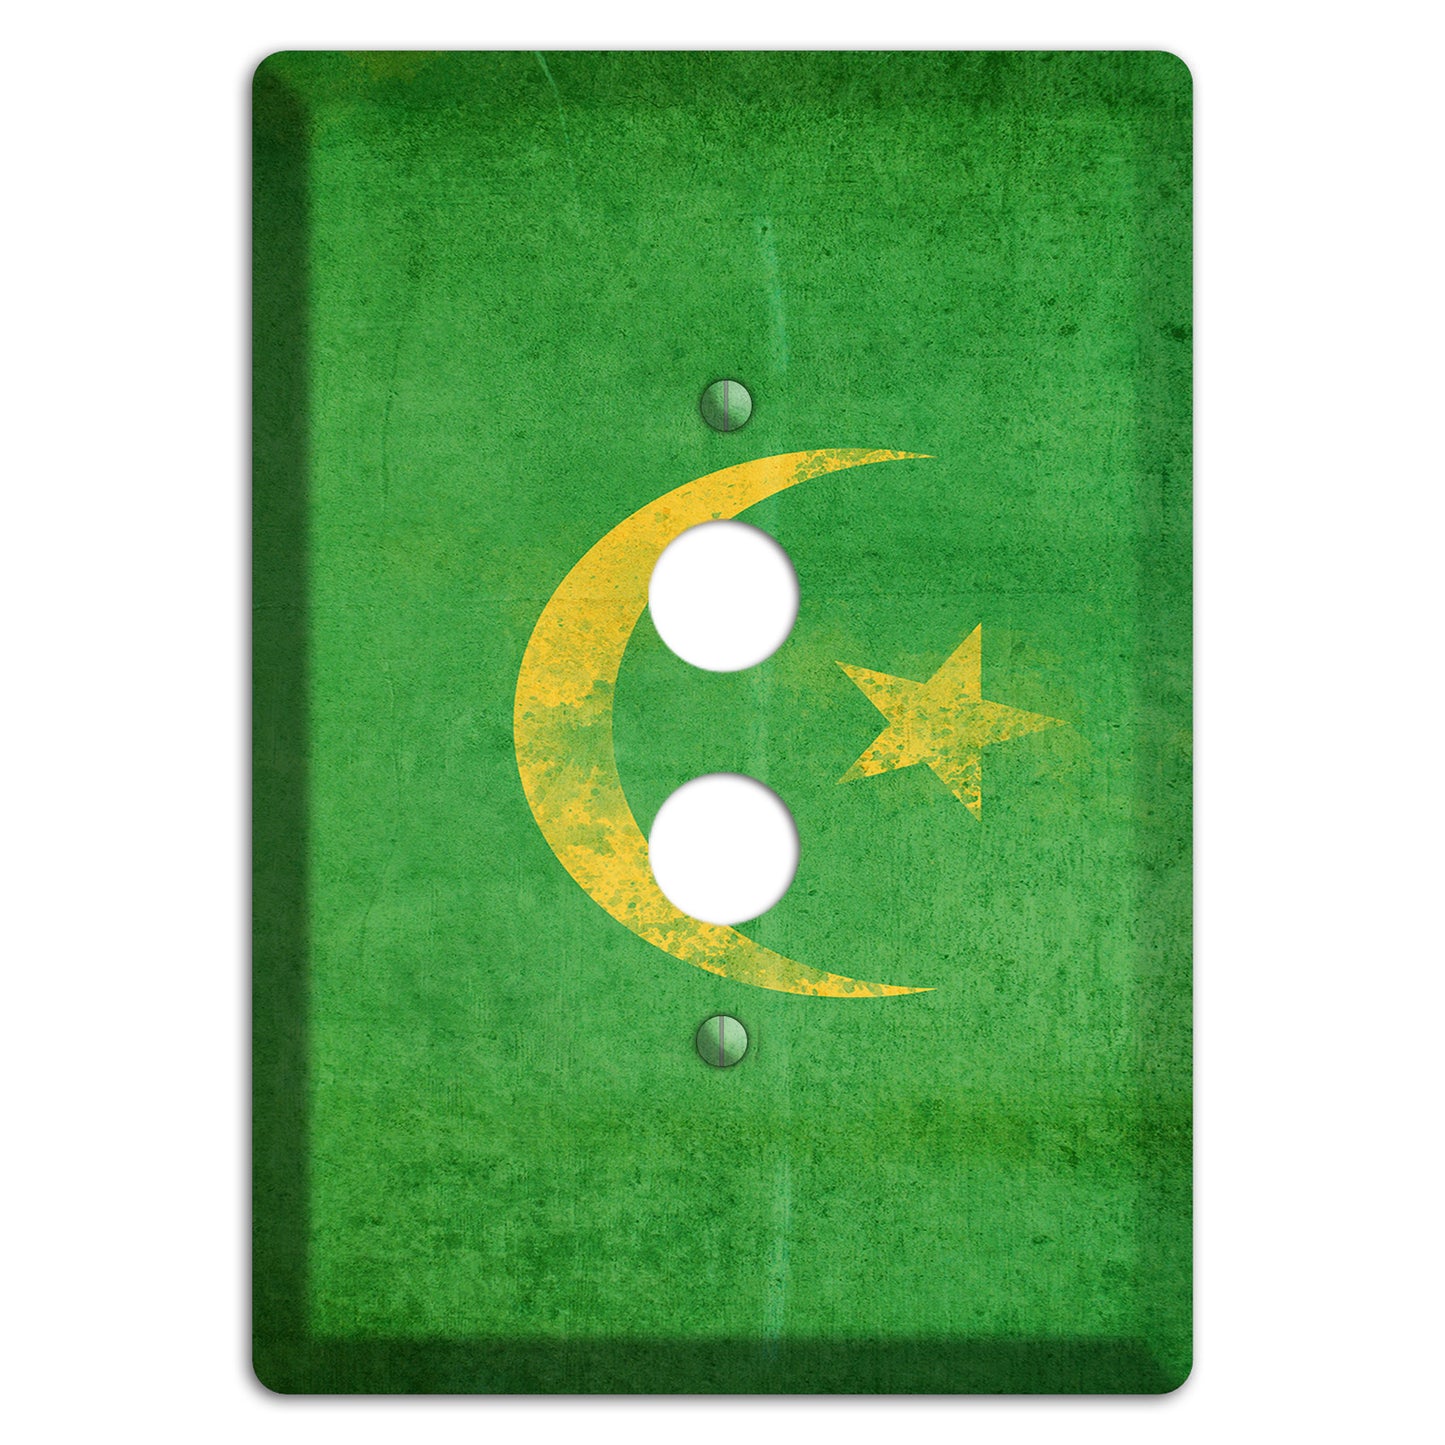 Mauritania Cover Plates 1 Pushbutton Wallplate